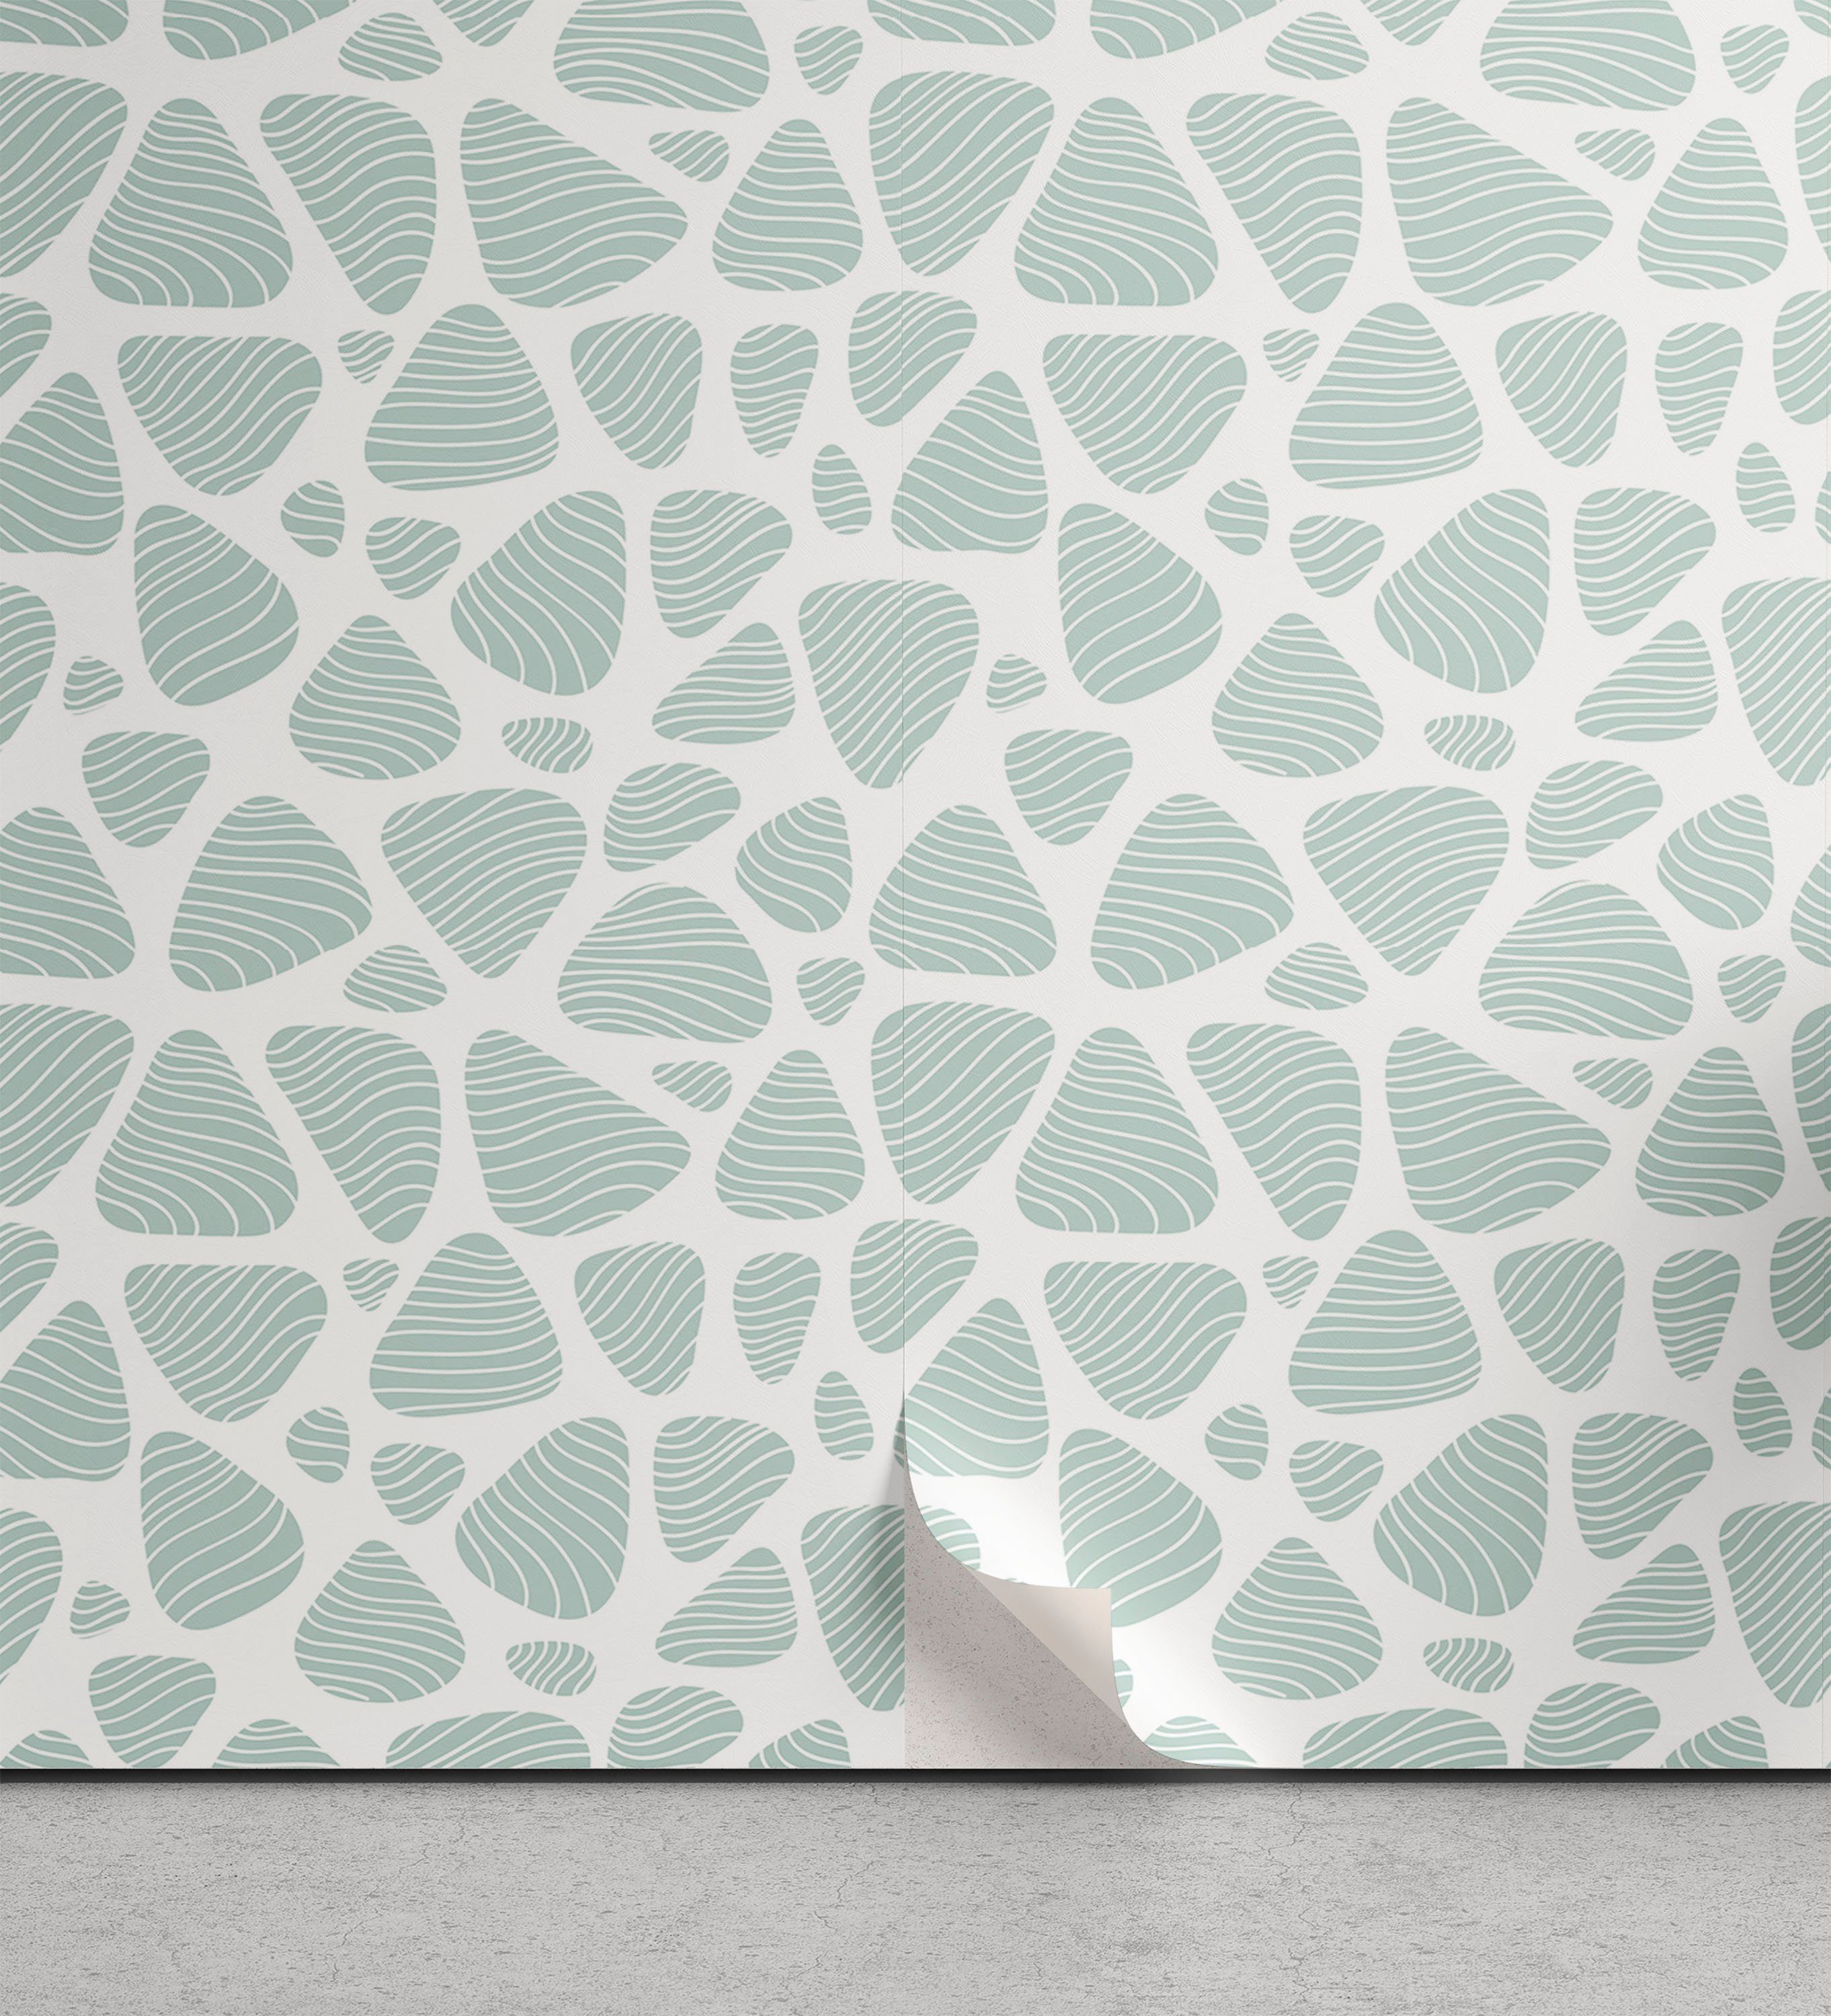 Abakuhaus Vinyltapete selbstklebendes Wohnzimmer Küchenakzent, neutrale Farbe Pebble Wie Shapes